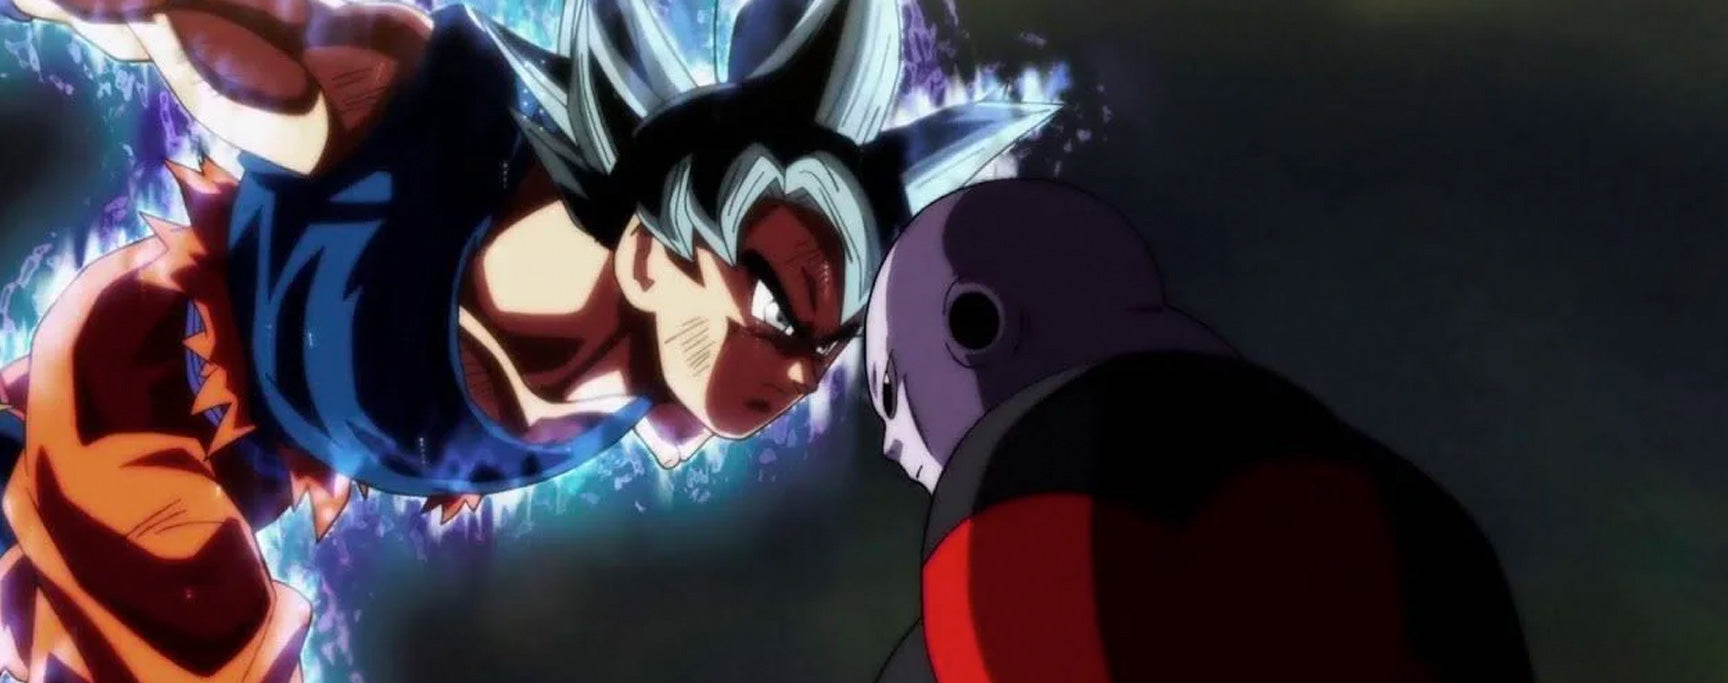 Jiren vs Goku